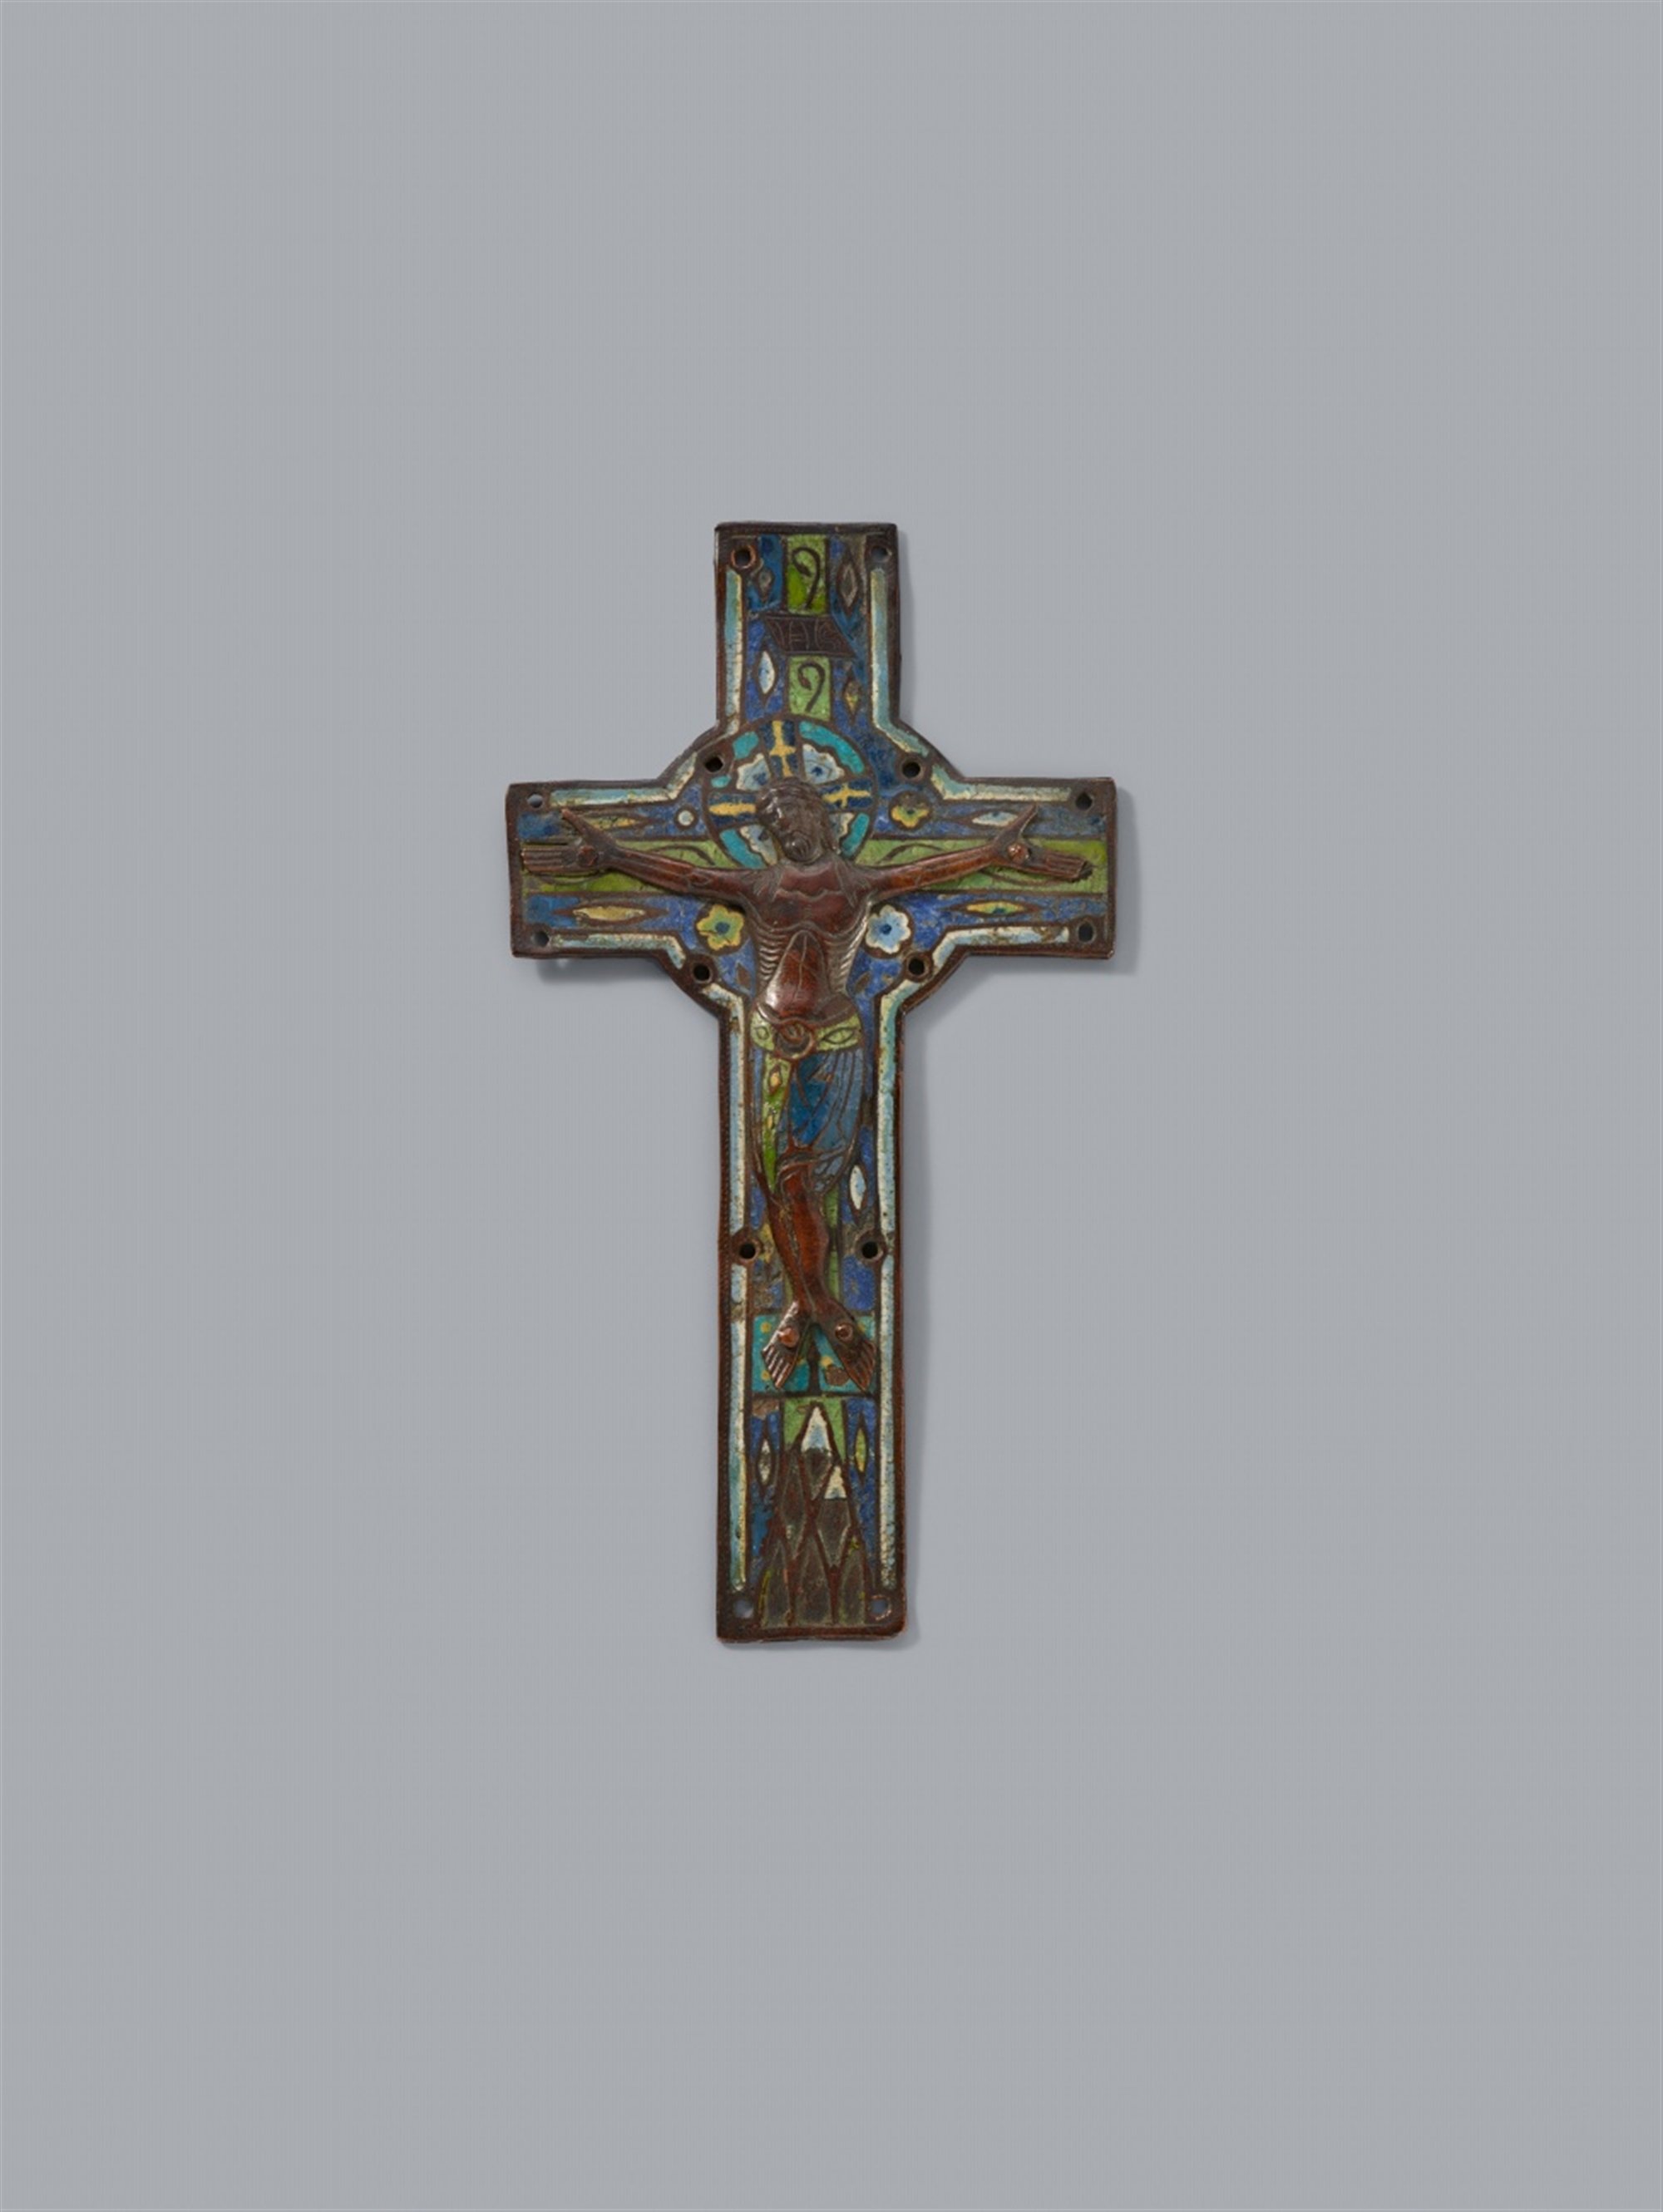 A 13th century Limoges bronze crucifix